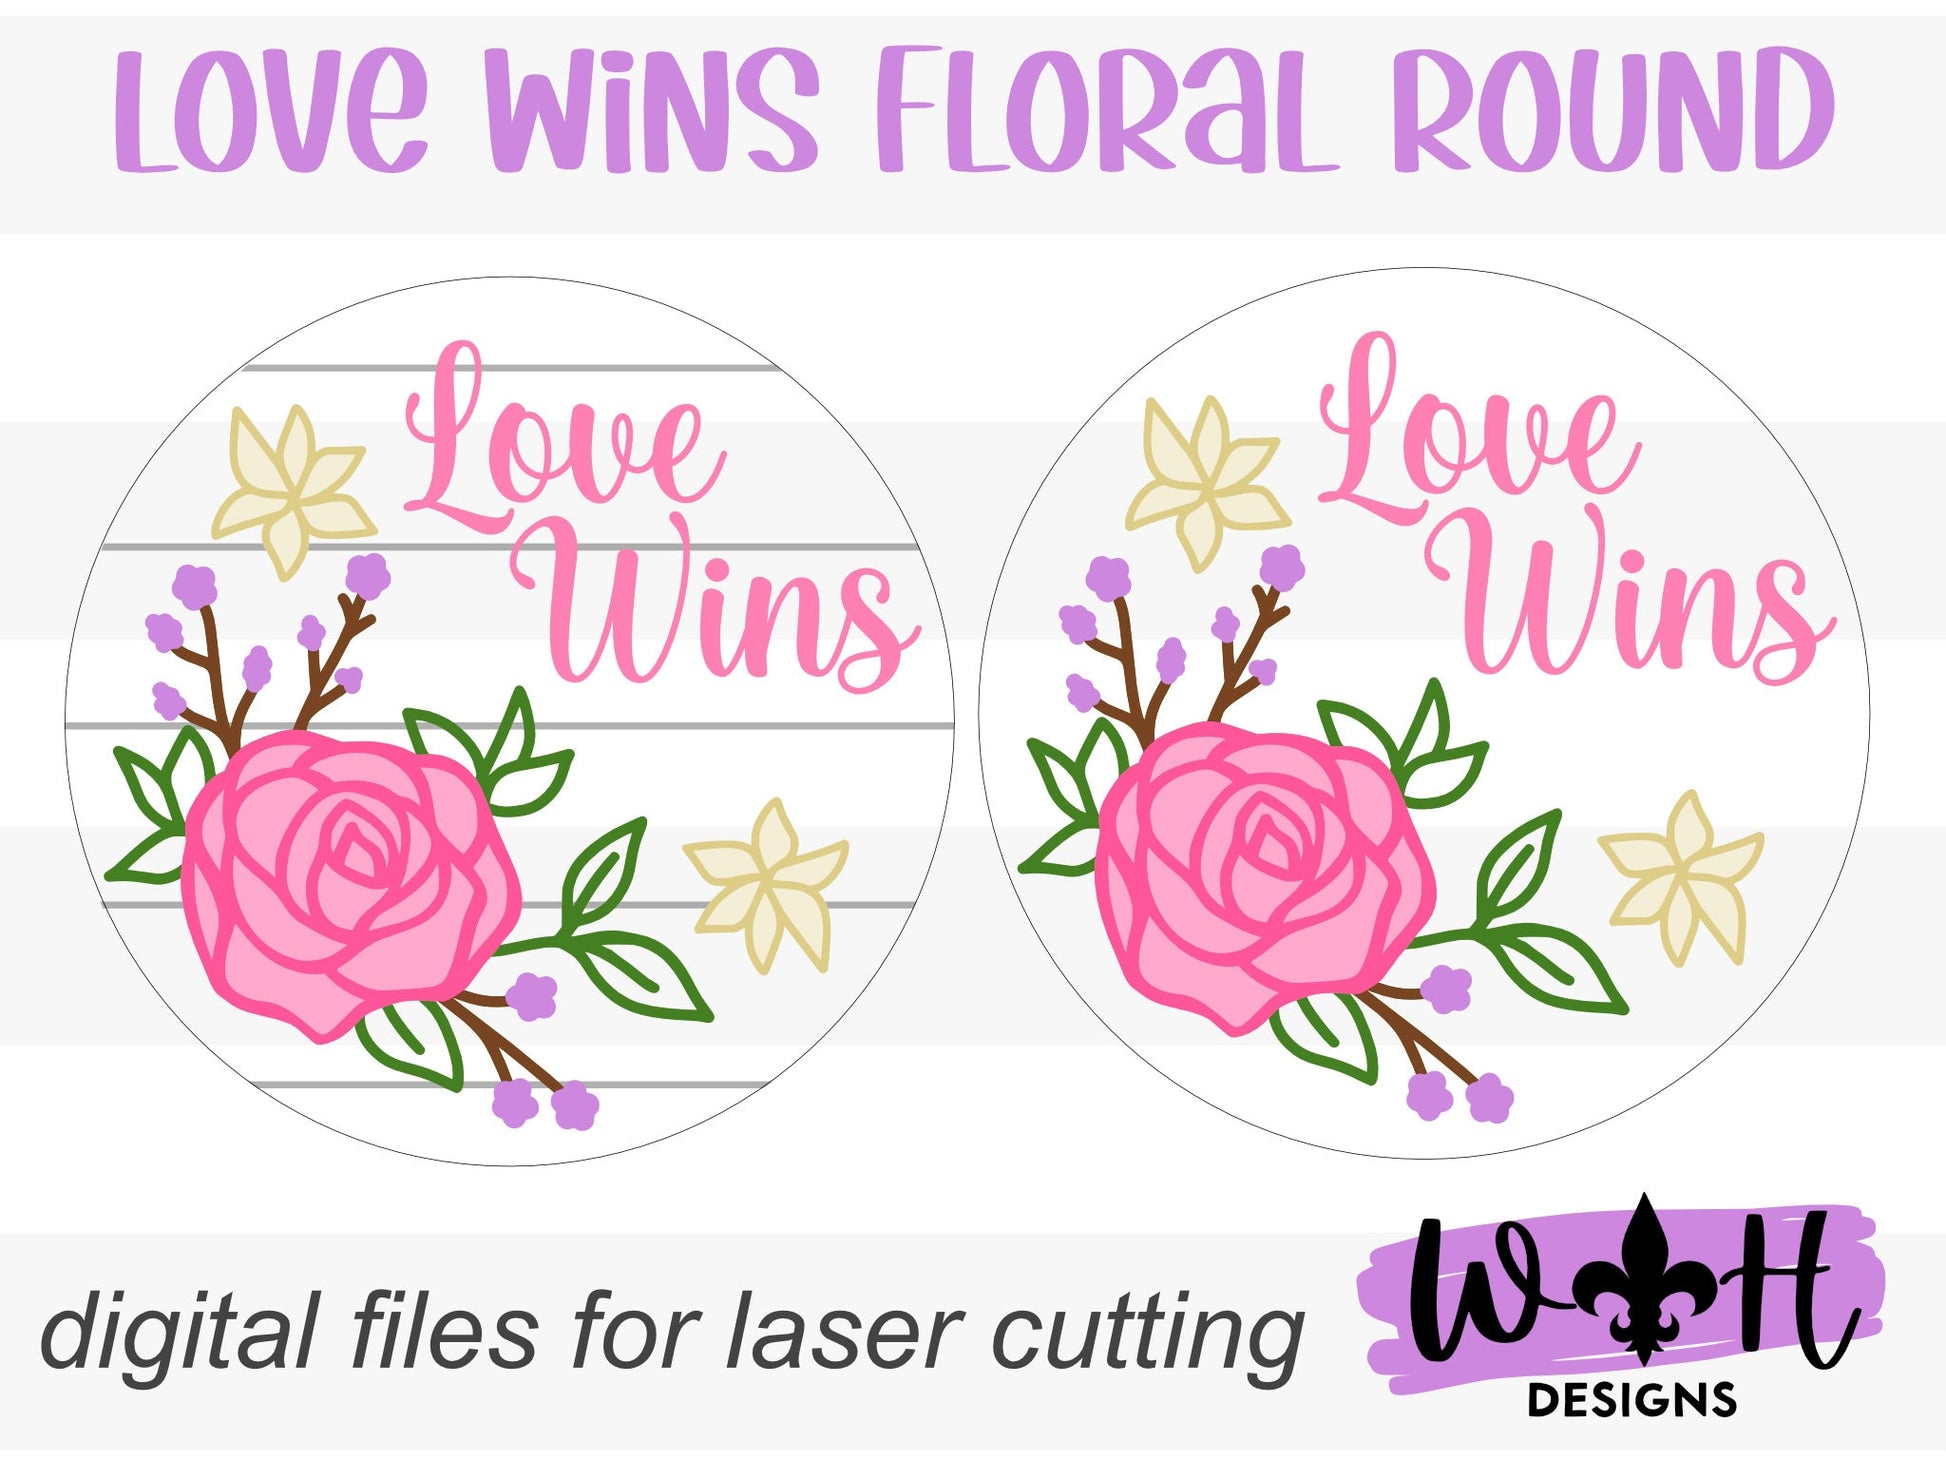 Love Wins Rose Valentines Round Sign - Spring Floral Sign Making and DIY Kits - Single Line Cut File For Glowforge Laser - Digital SVG File